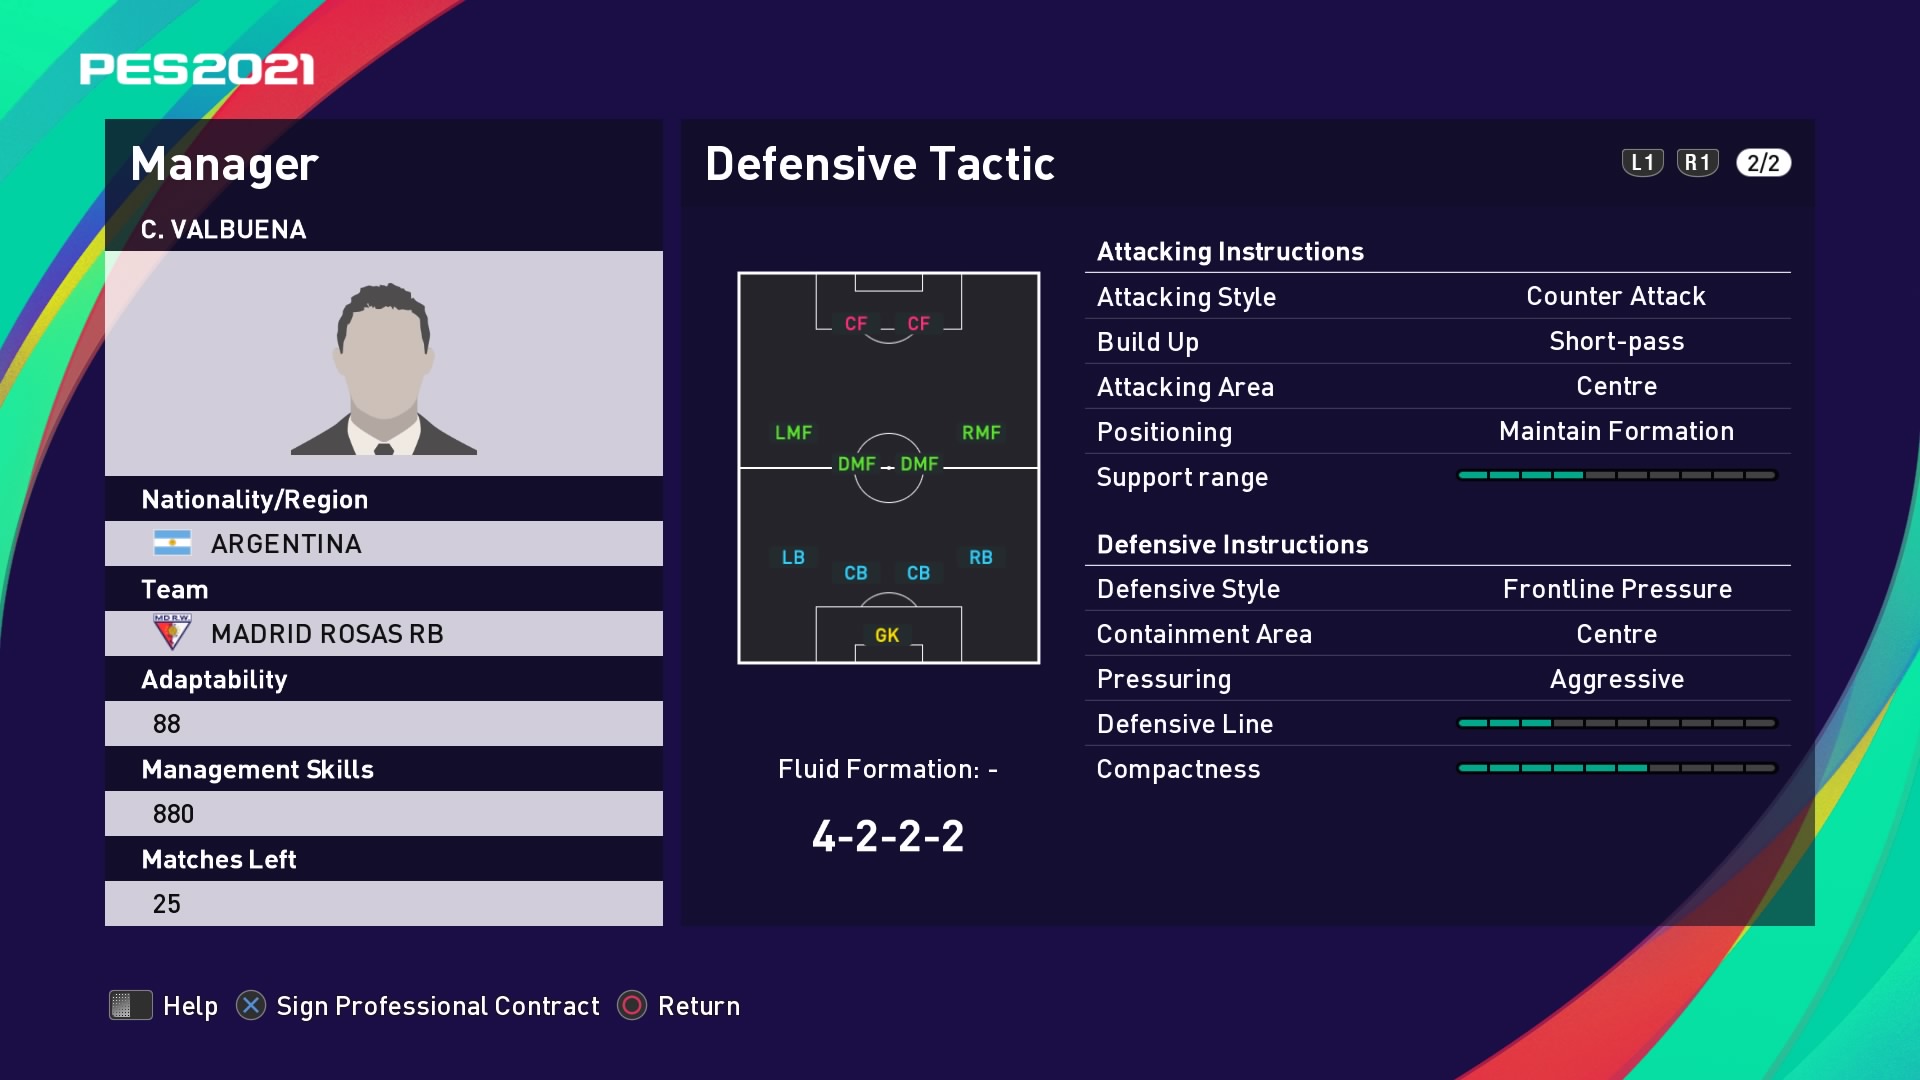 C. Valbuena (Diego Simeone) Defensive Tactic in PES 2021 myClub